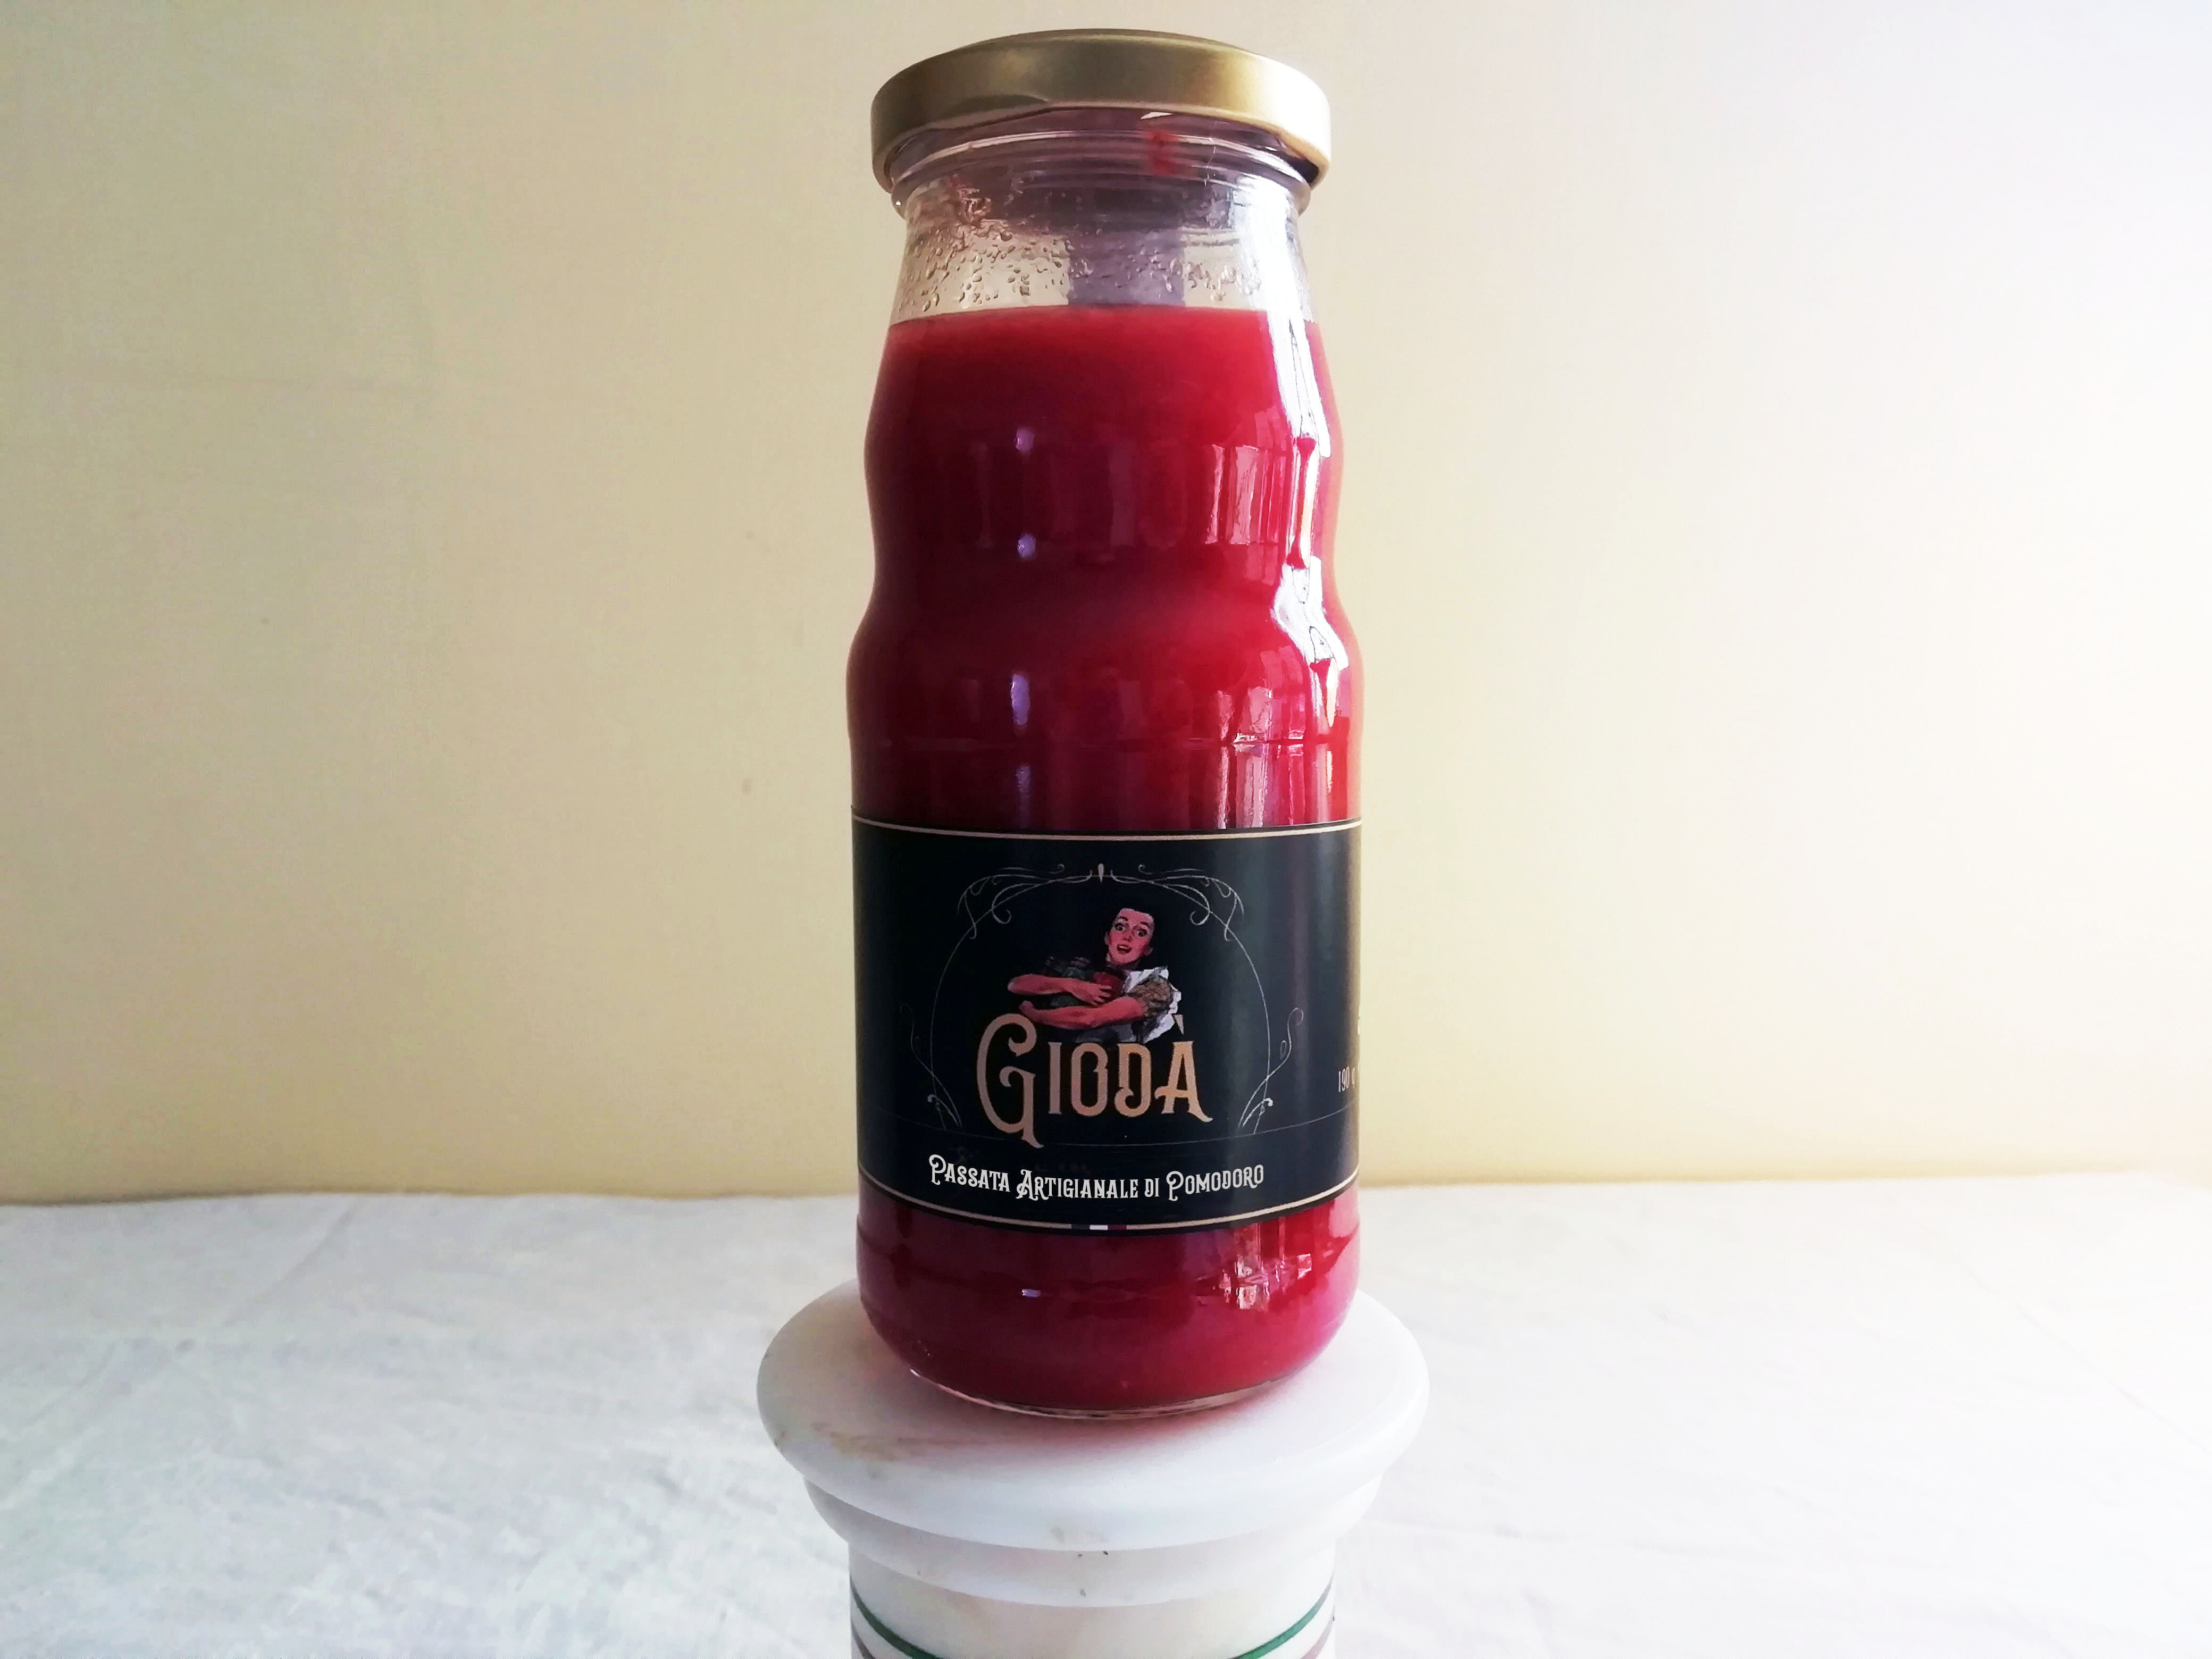 Passata artigianale di pomodoro - Artisanal tomato sauce 330g